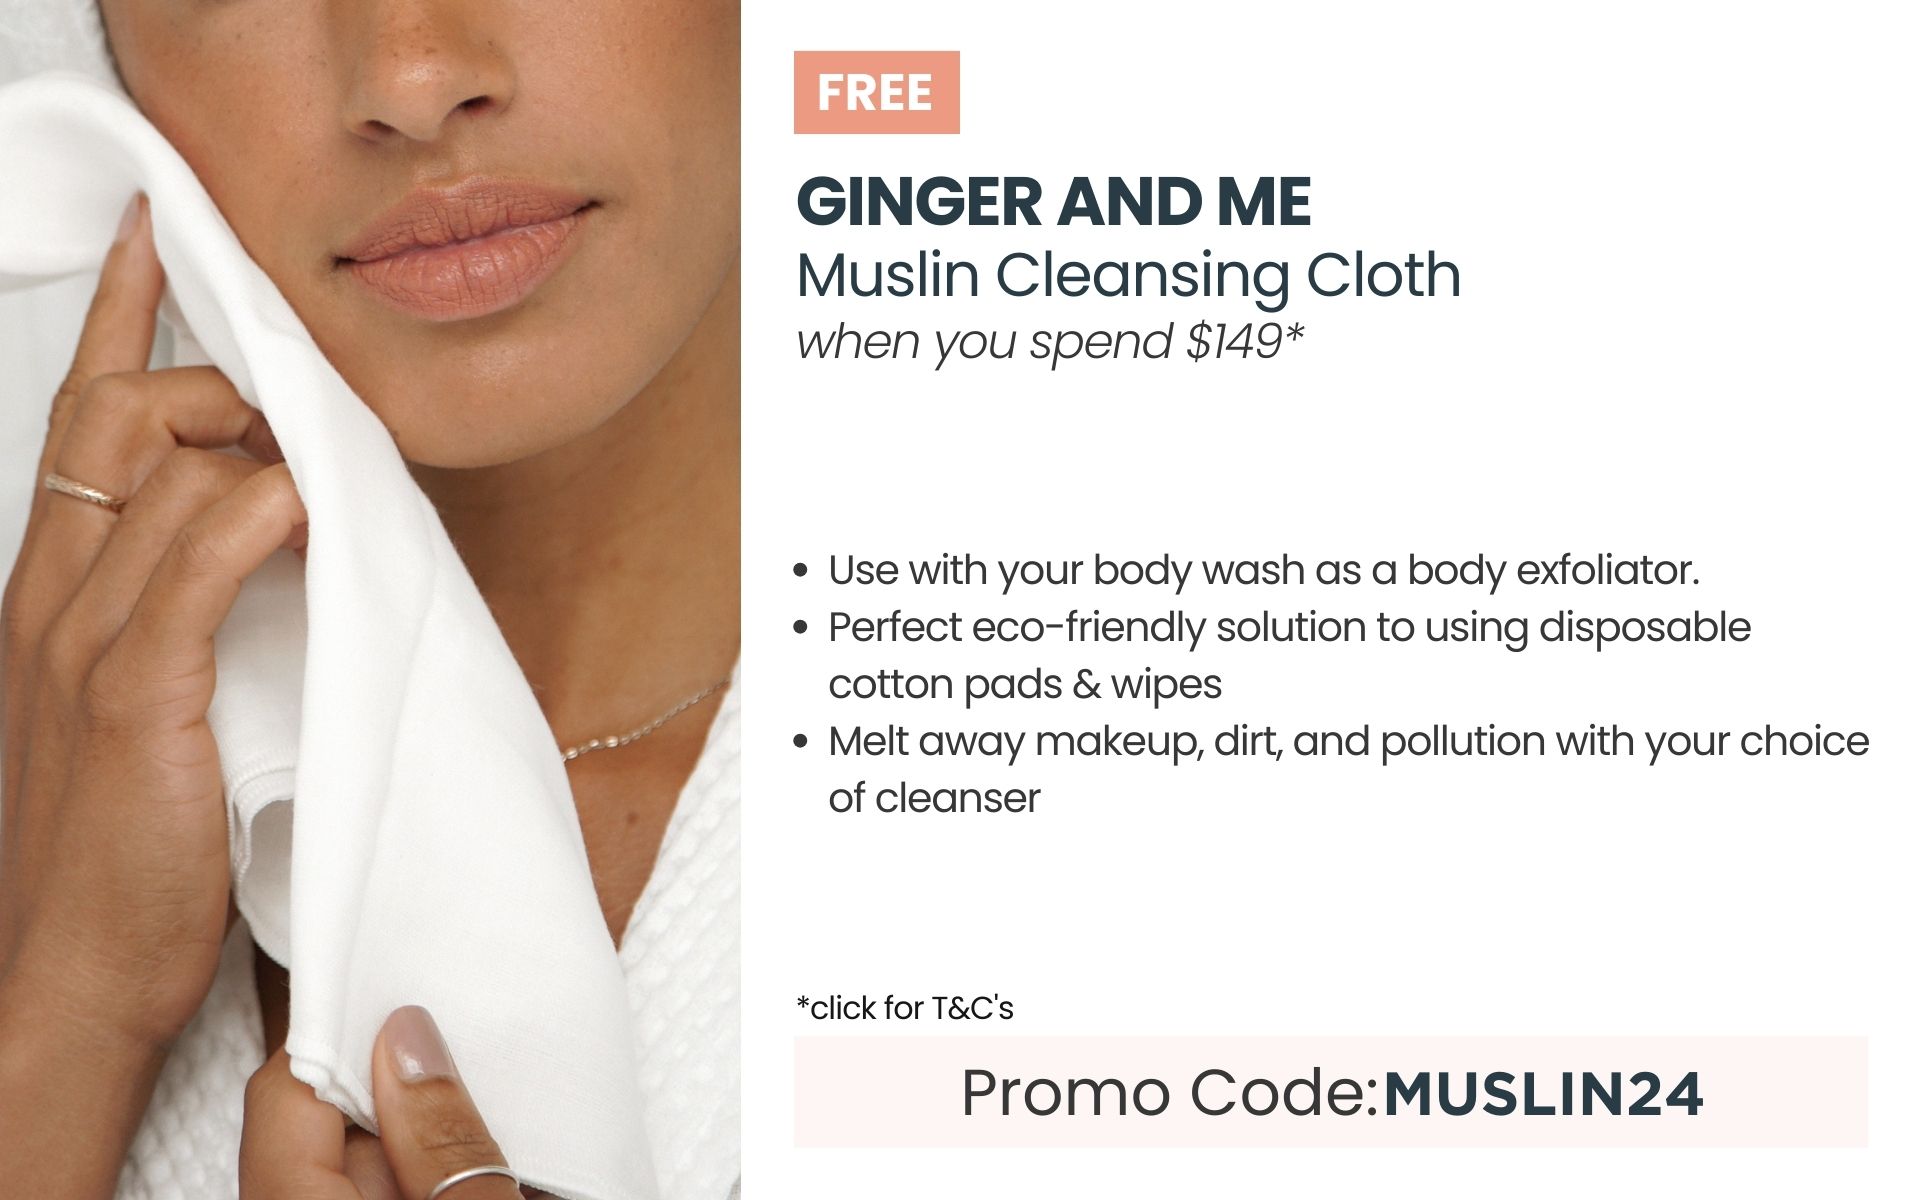 FREE Ginger & Me Muslin Cloth.  Min spend $149.  Promo code: MUSLIN24